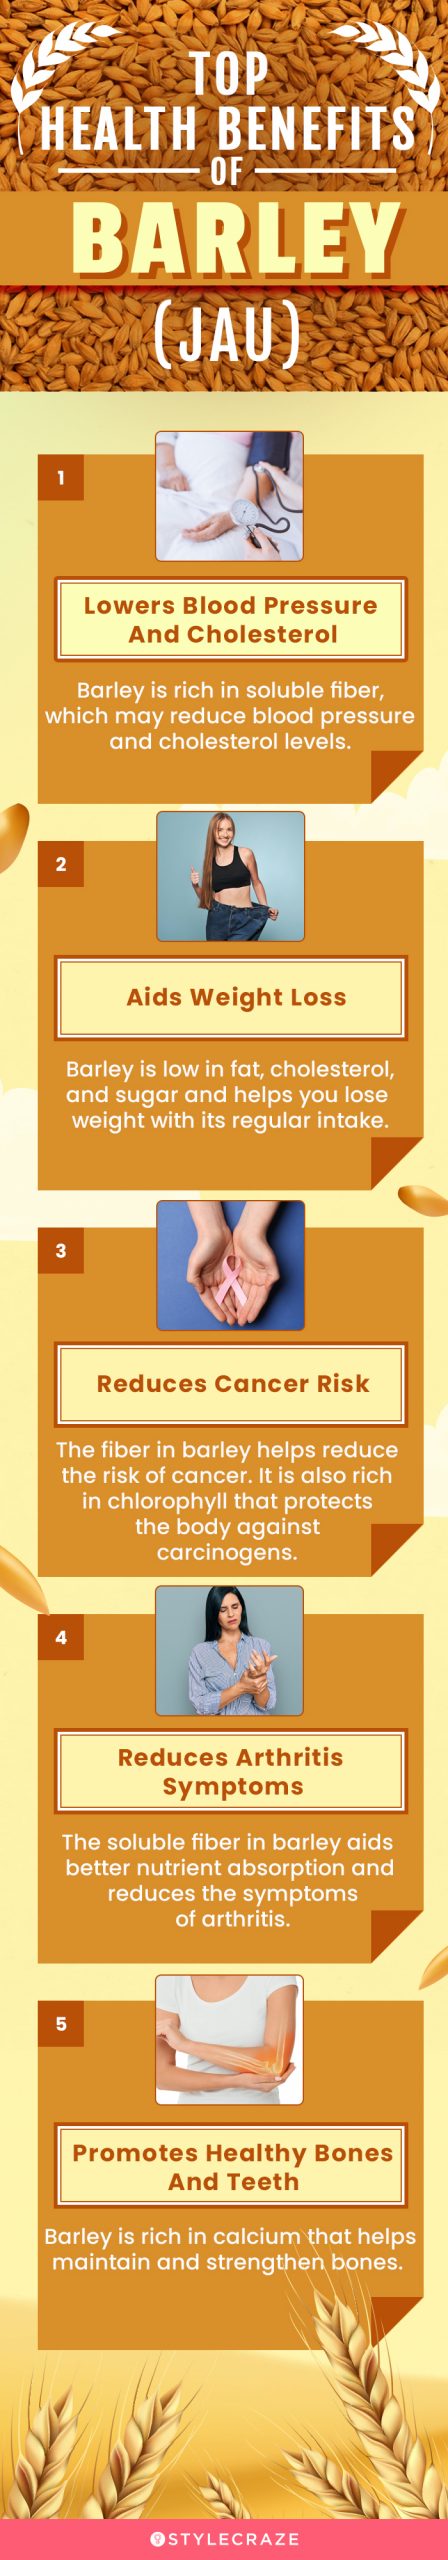 amazing health benefits of barley (jau) [infographic]